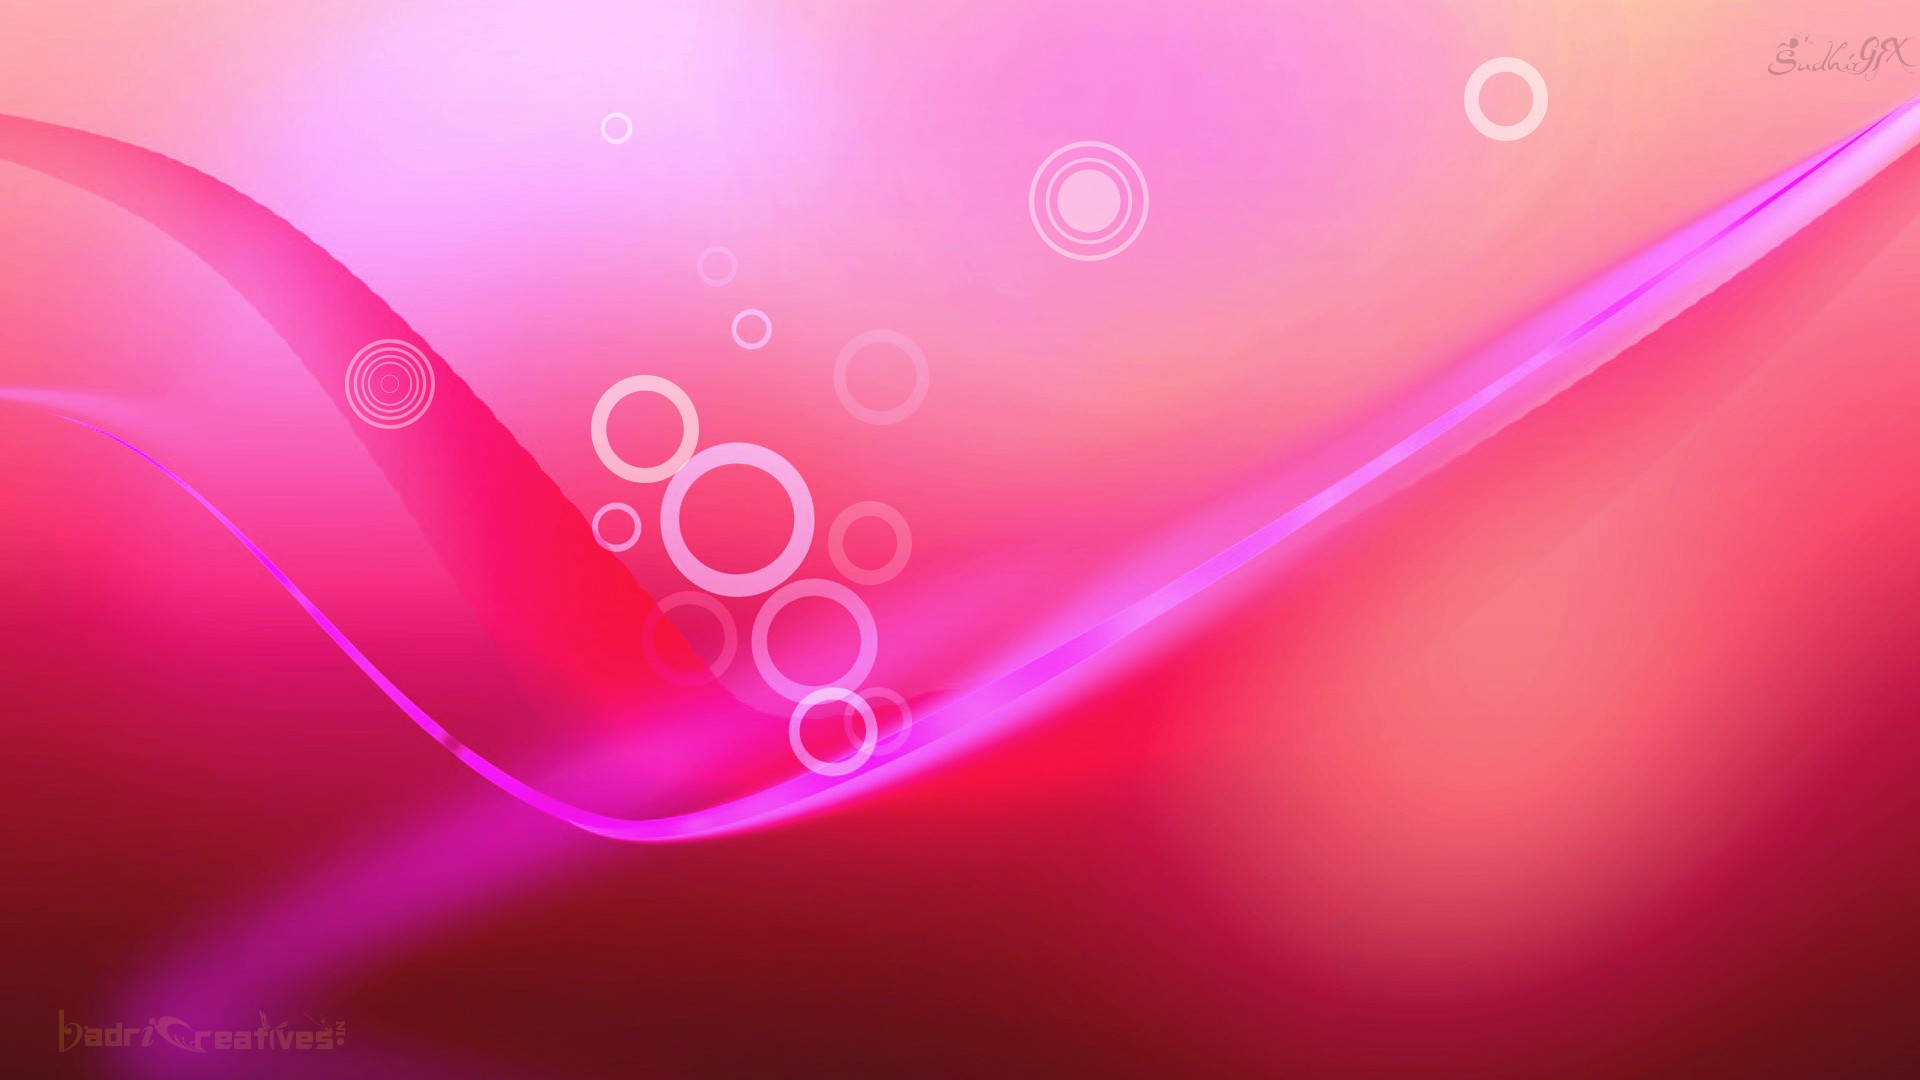 Pink Bubbles Hq Wallpaper Badricreatives HD Devotional